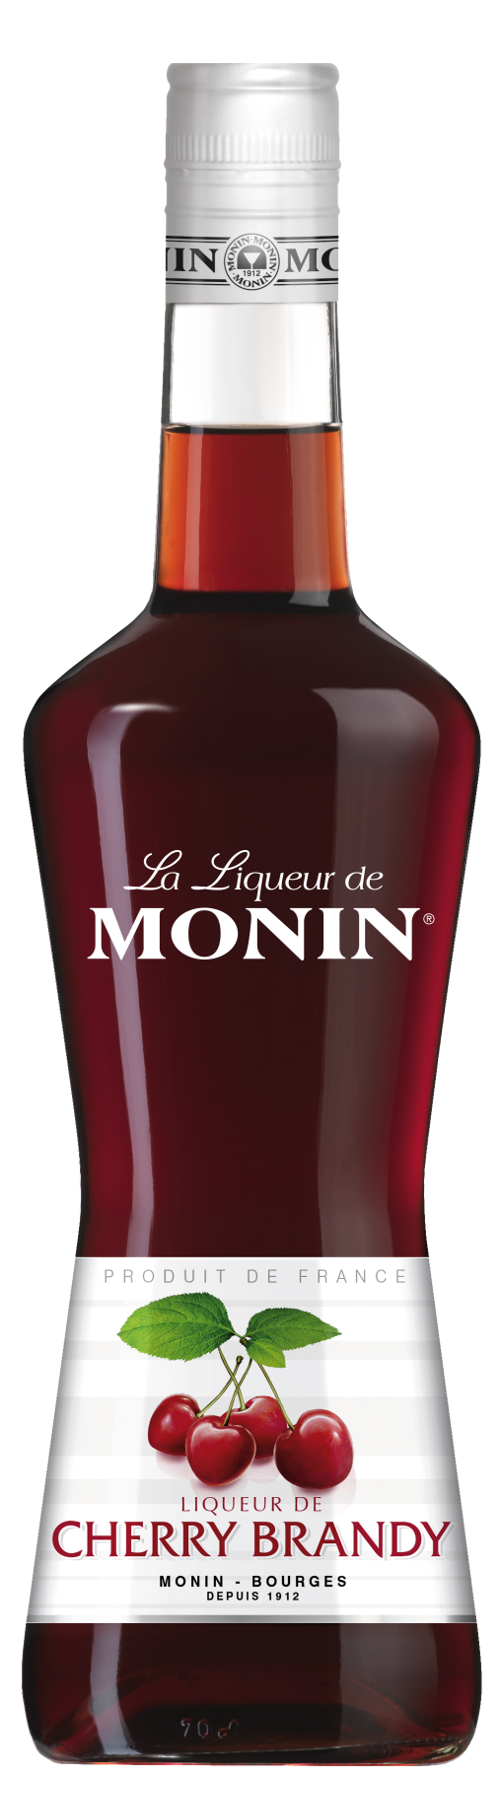 La Liqueur de MONIN Cherry Brandy 0.7l